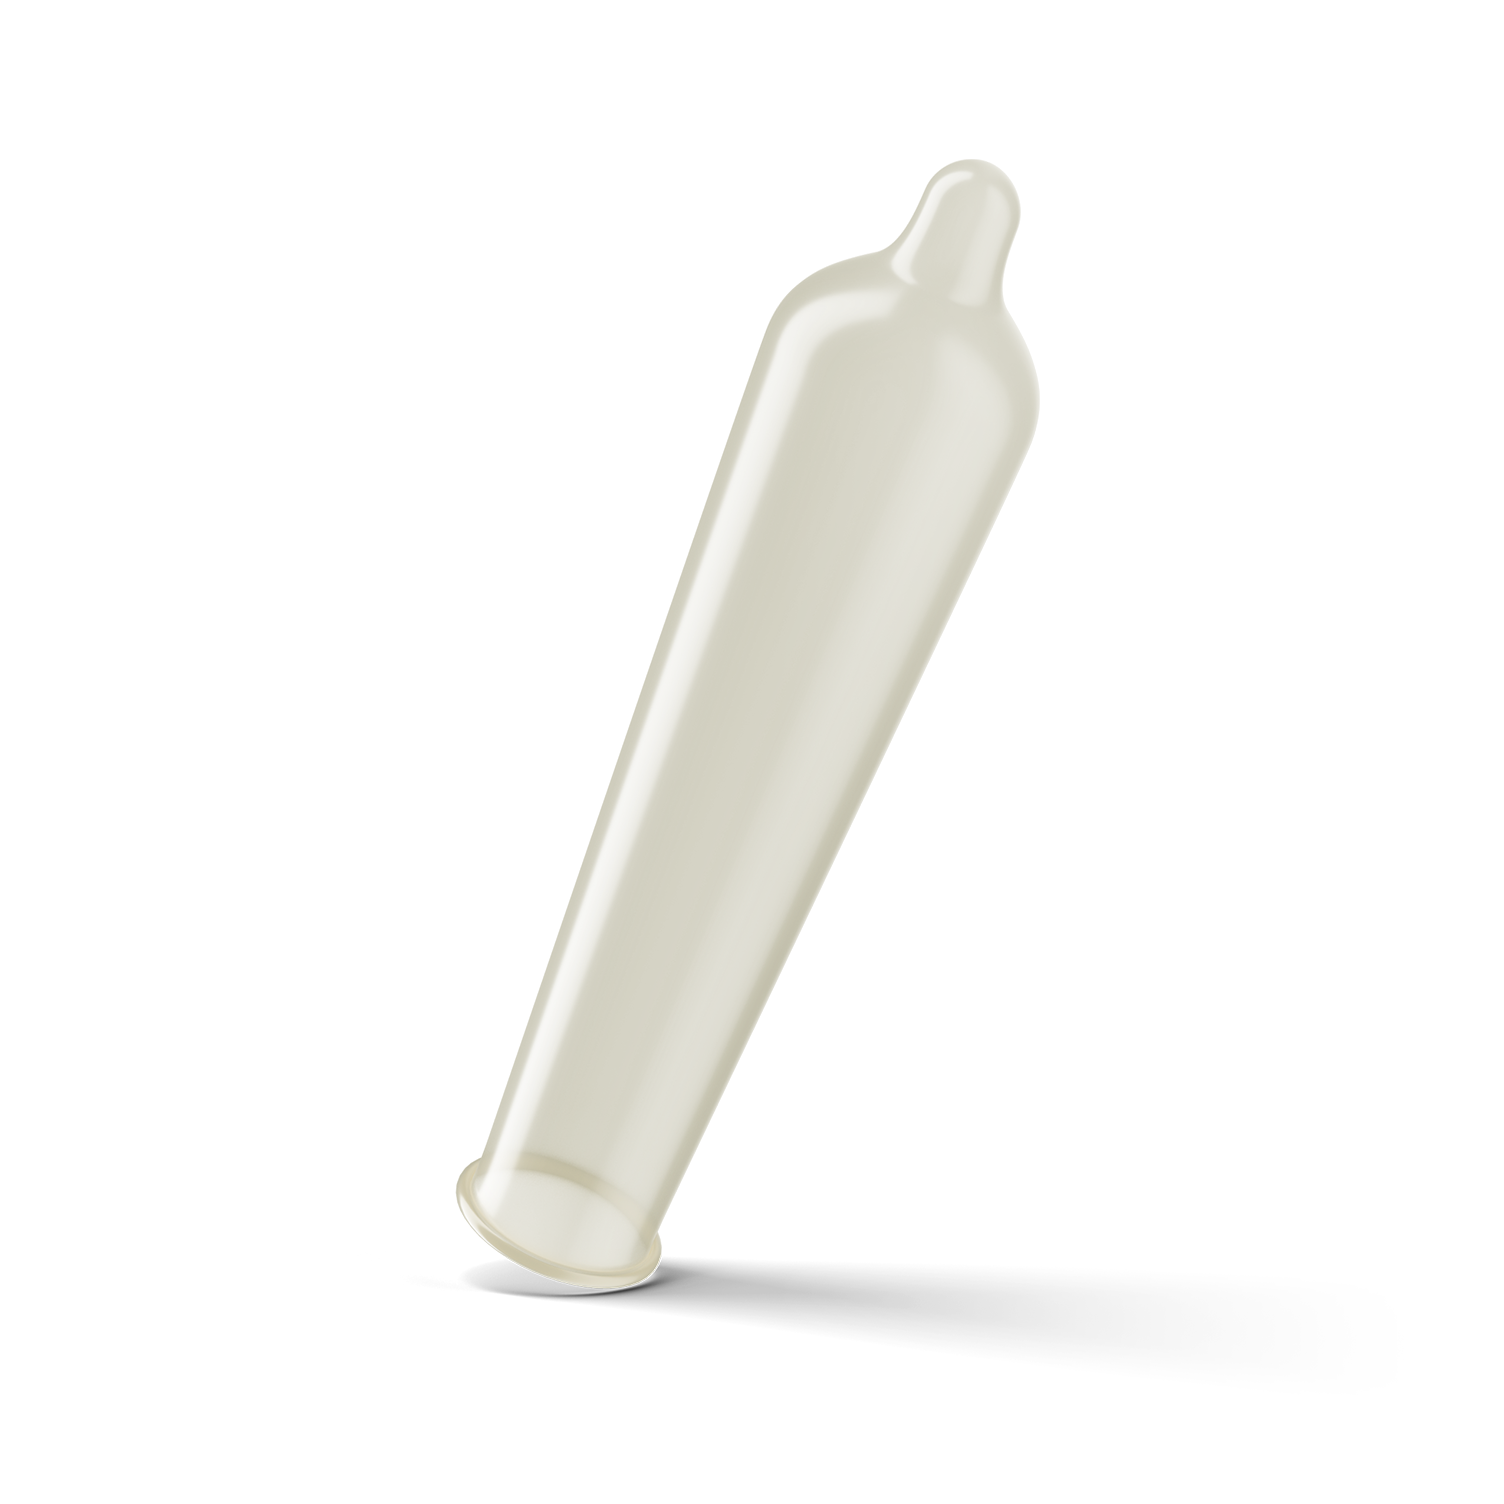 Trojan™ Ultra Fit™ Comfort Feel, Lubricated Condoms